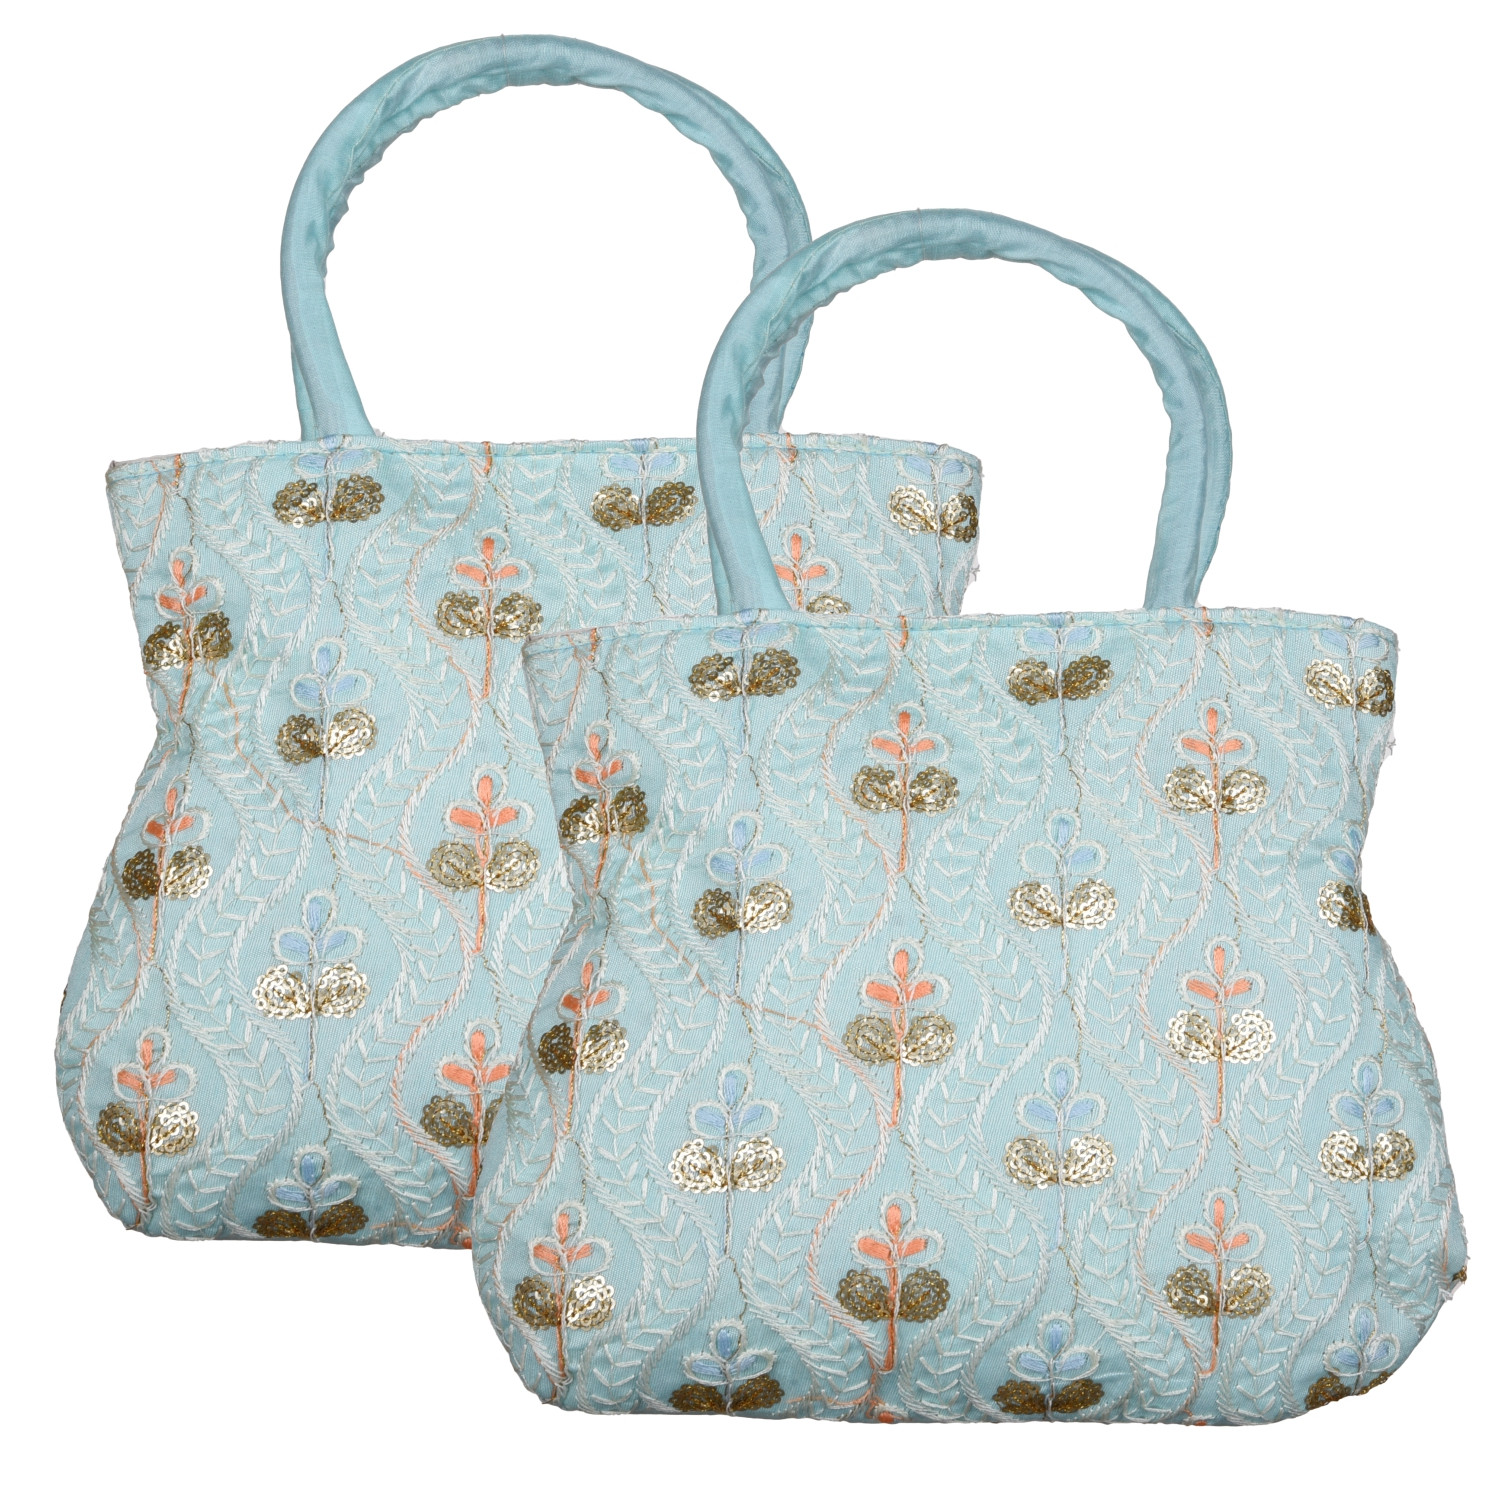 Kuber Industries Hand Bag | Traditional Hand Bag | Silk Wallet Hand Bag | Woman Tote Hand Bag | Ladies Purse Handbag | Gifts Hand Bag | Curved Shape Embroidery Hand Bag | Light Blue